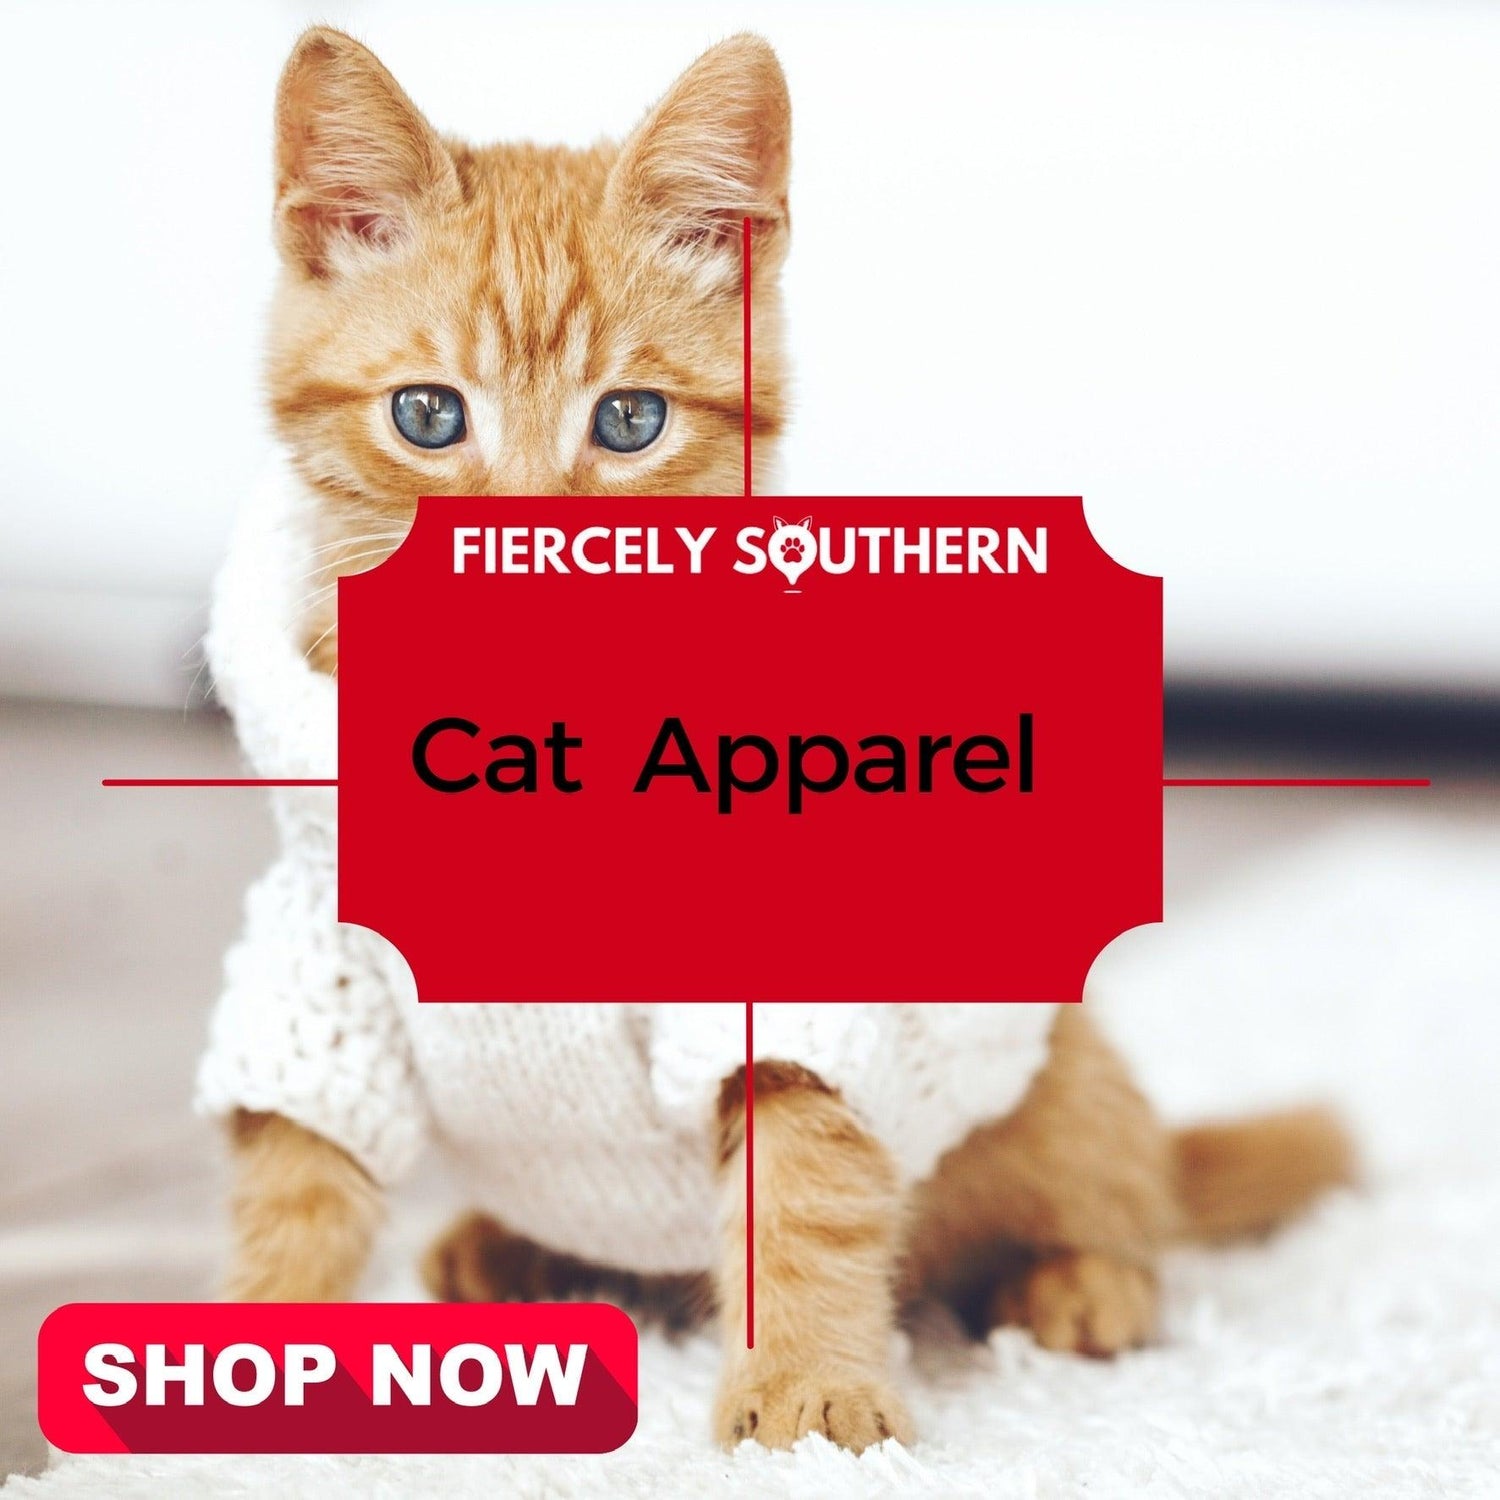 Cat Apparel - Fiercely Southern